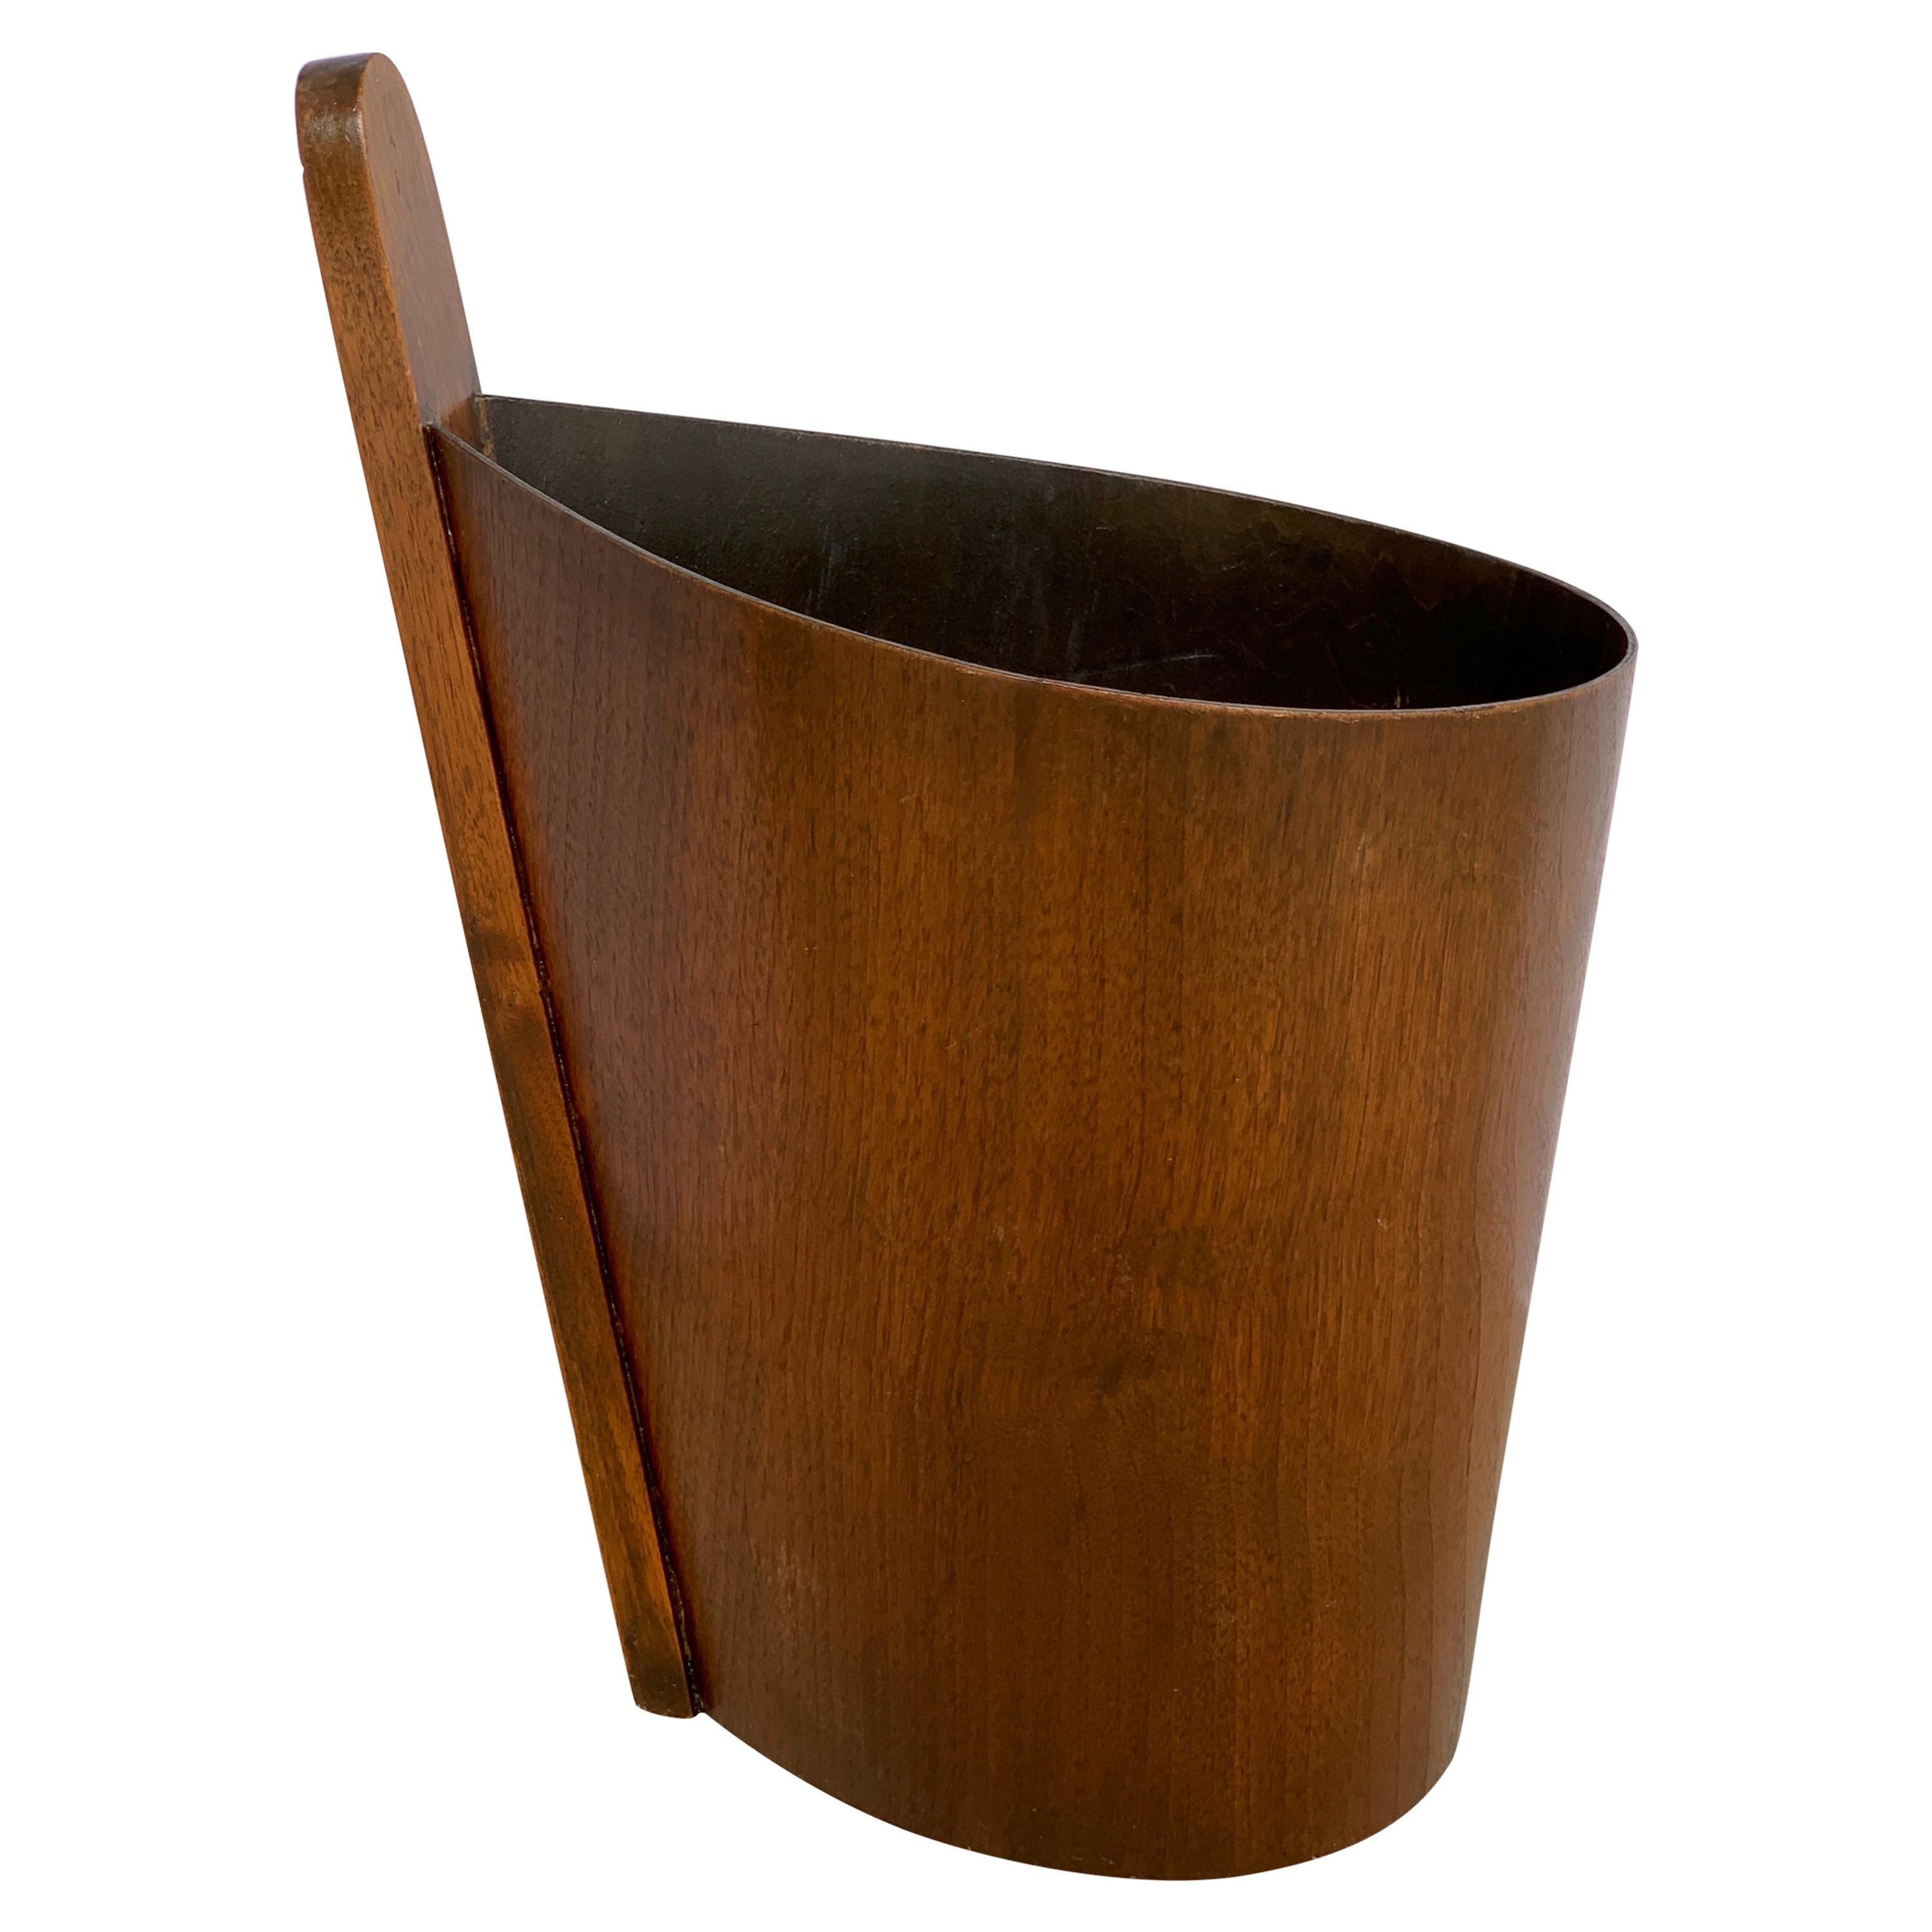 Danish Modern Teak and Walnut Handled Wastepaper Basket, by P. S. Heggen For Sale